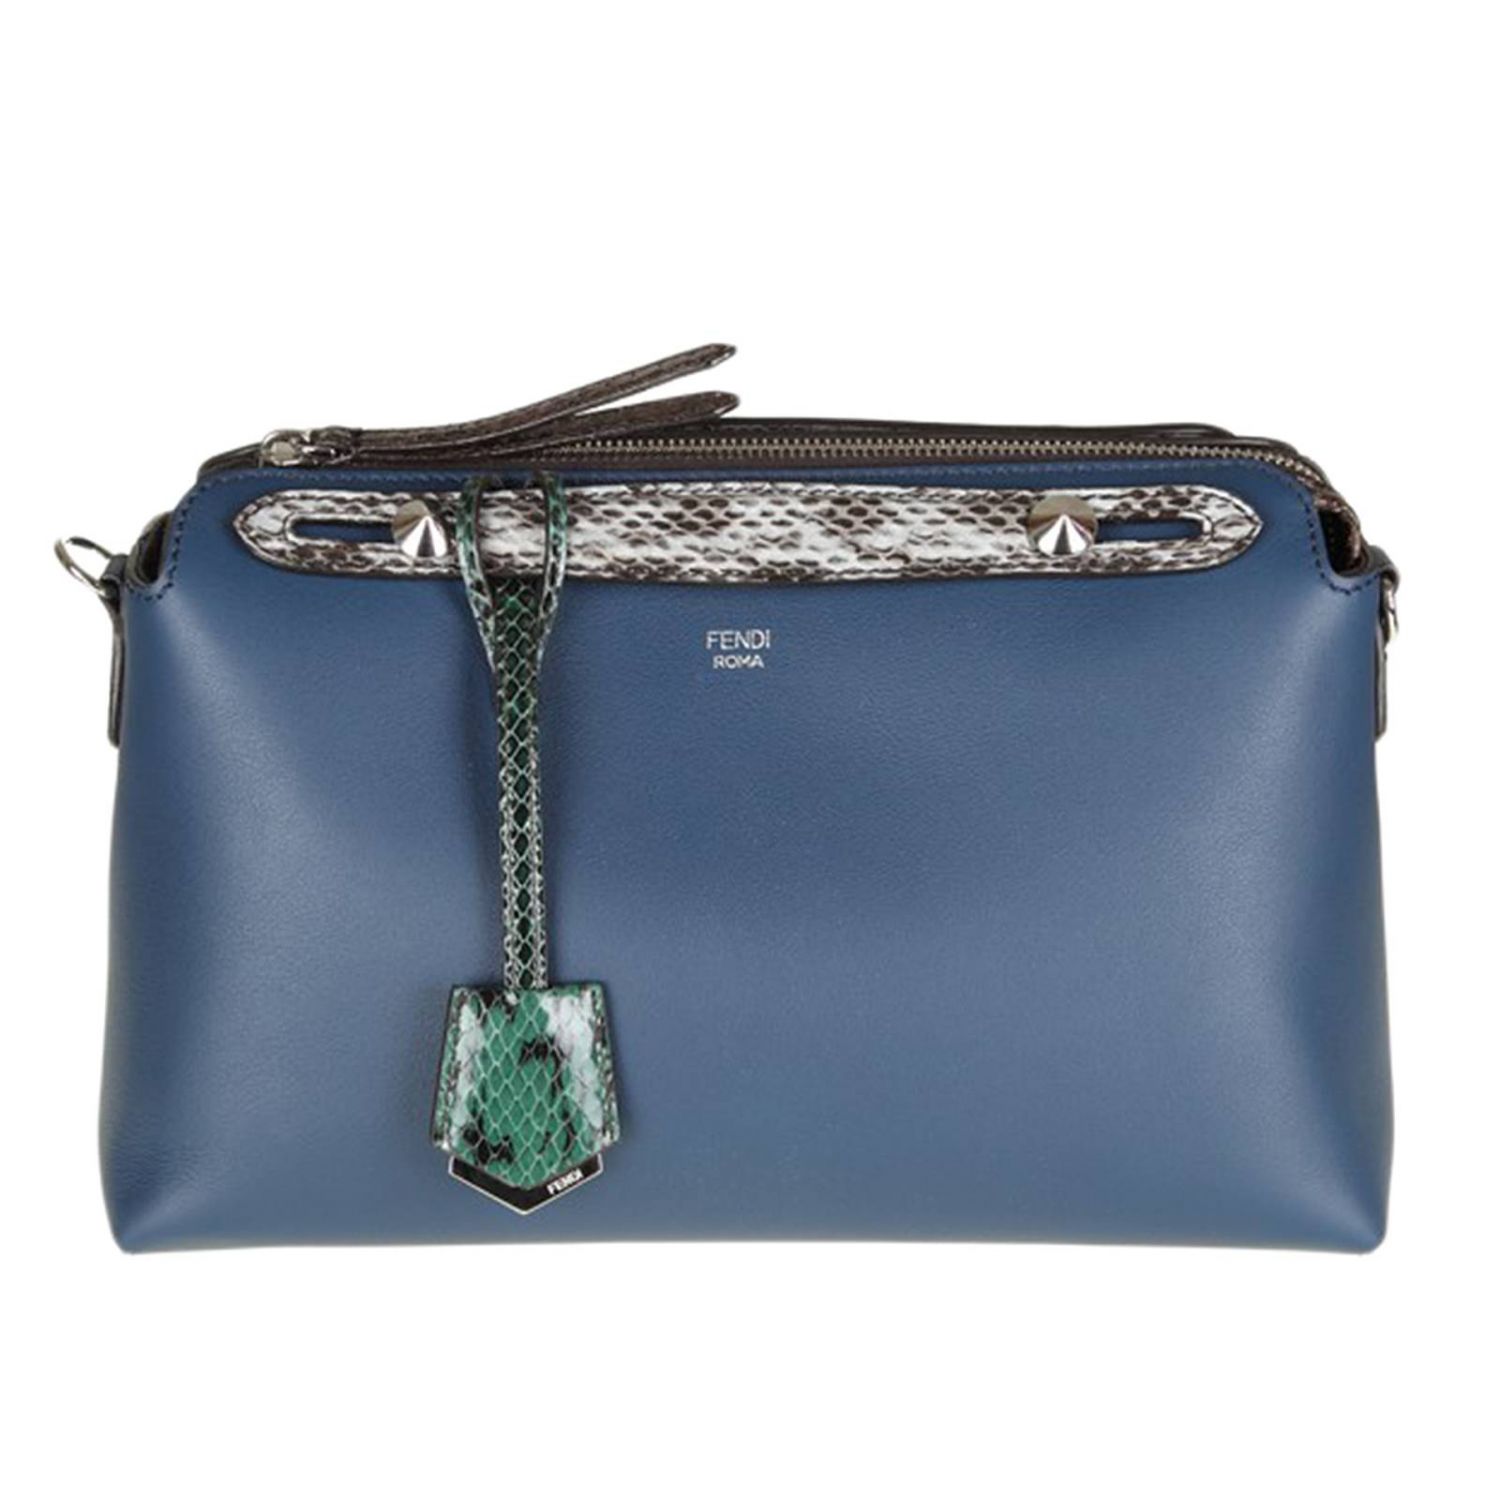 FENDI: Shoulder bag women | Handbag Fendi Women Blue | Handbag Fendi ...